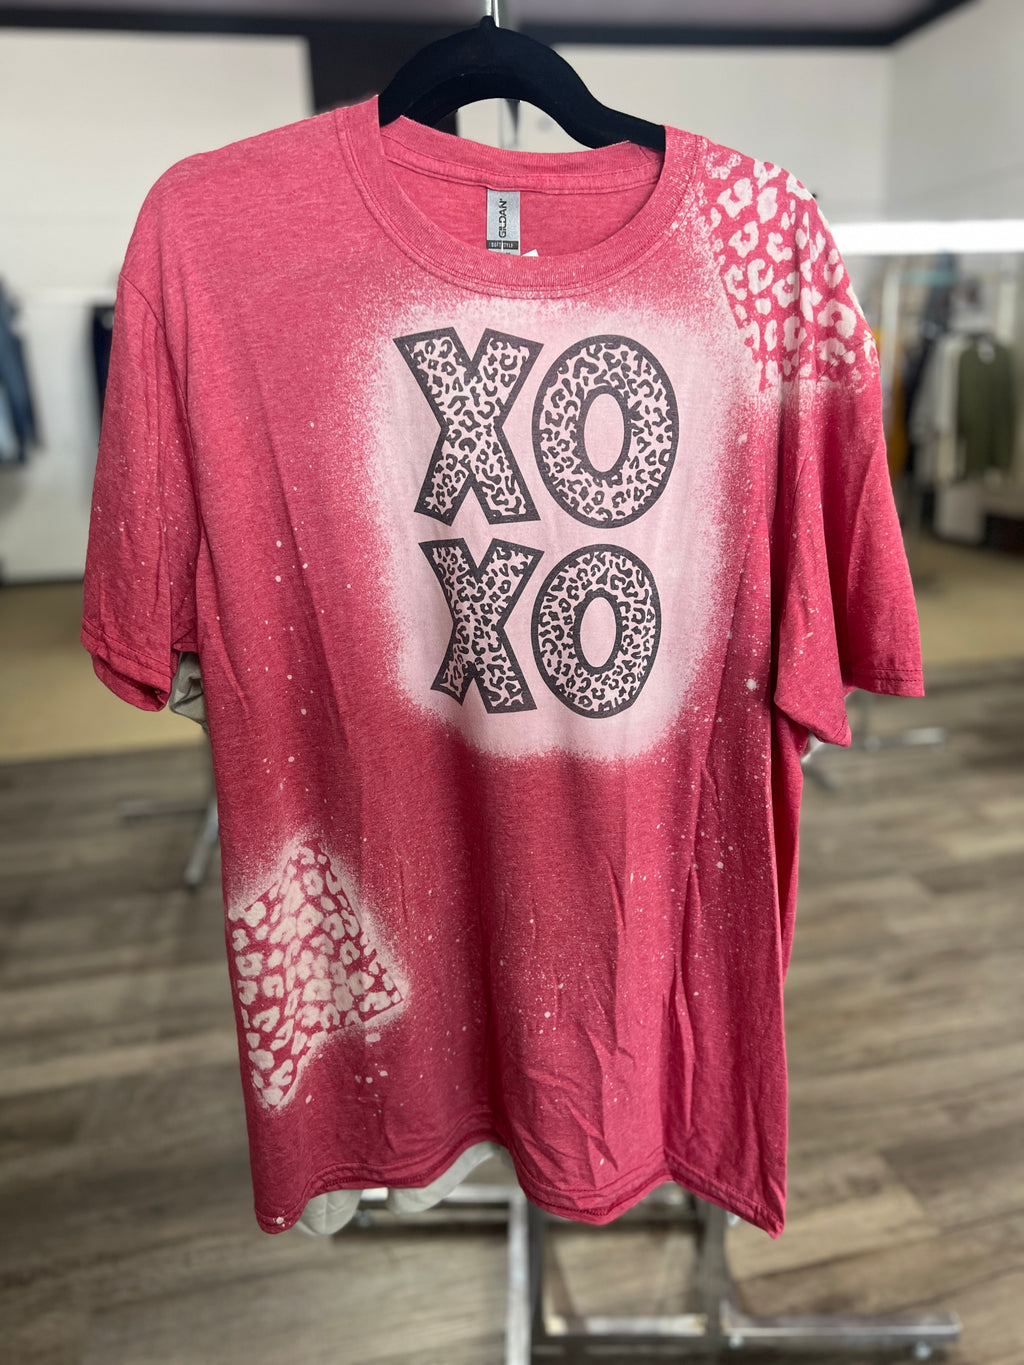 XOXO Tee-shirt